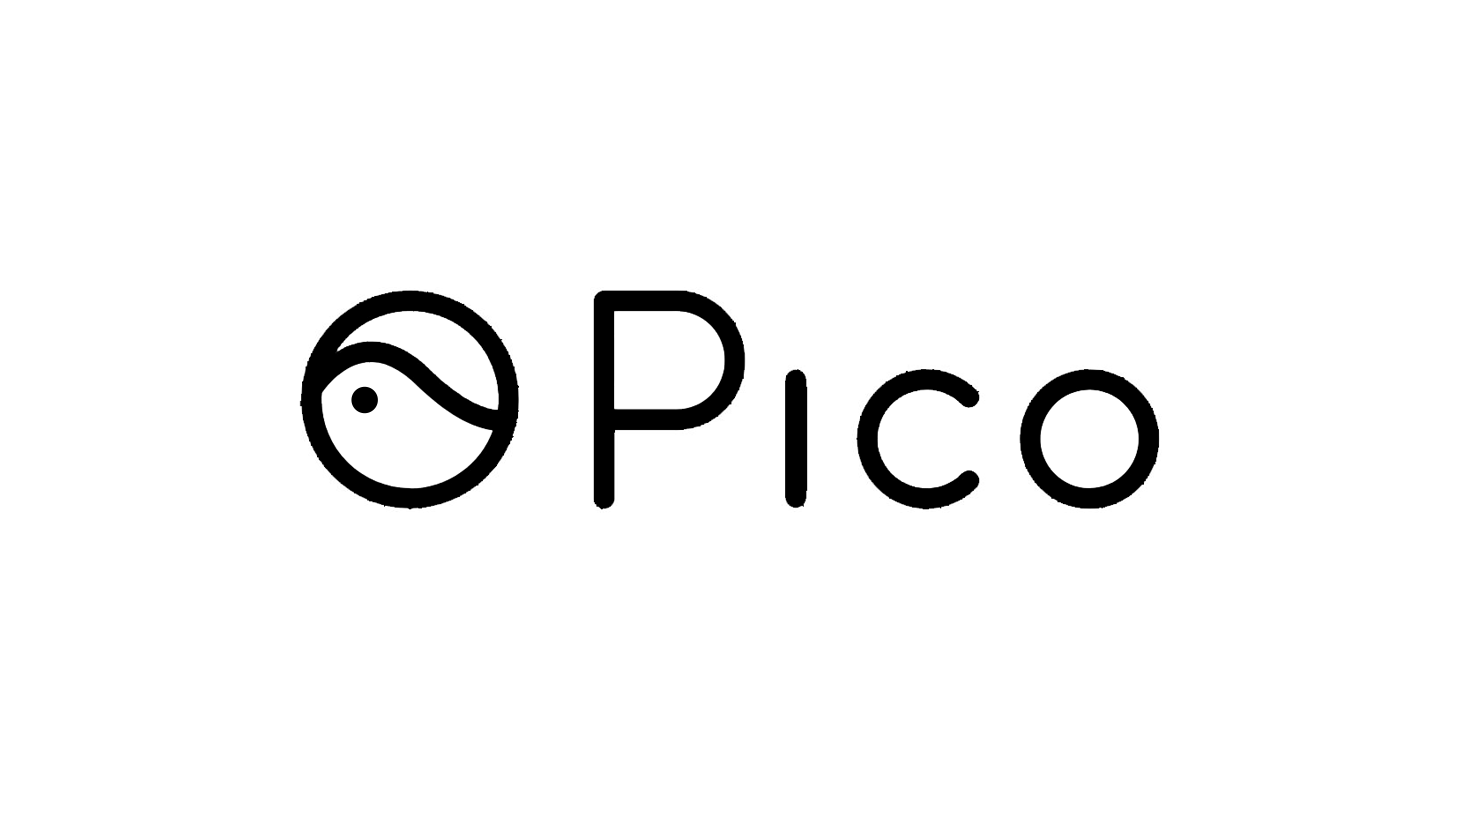 Logo Pico